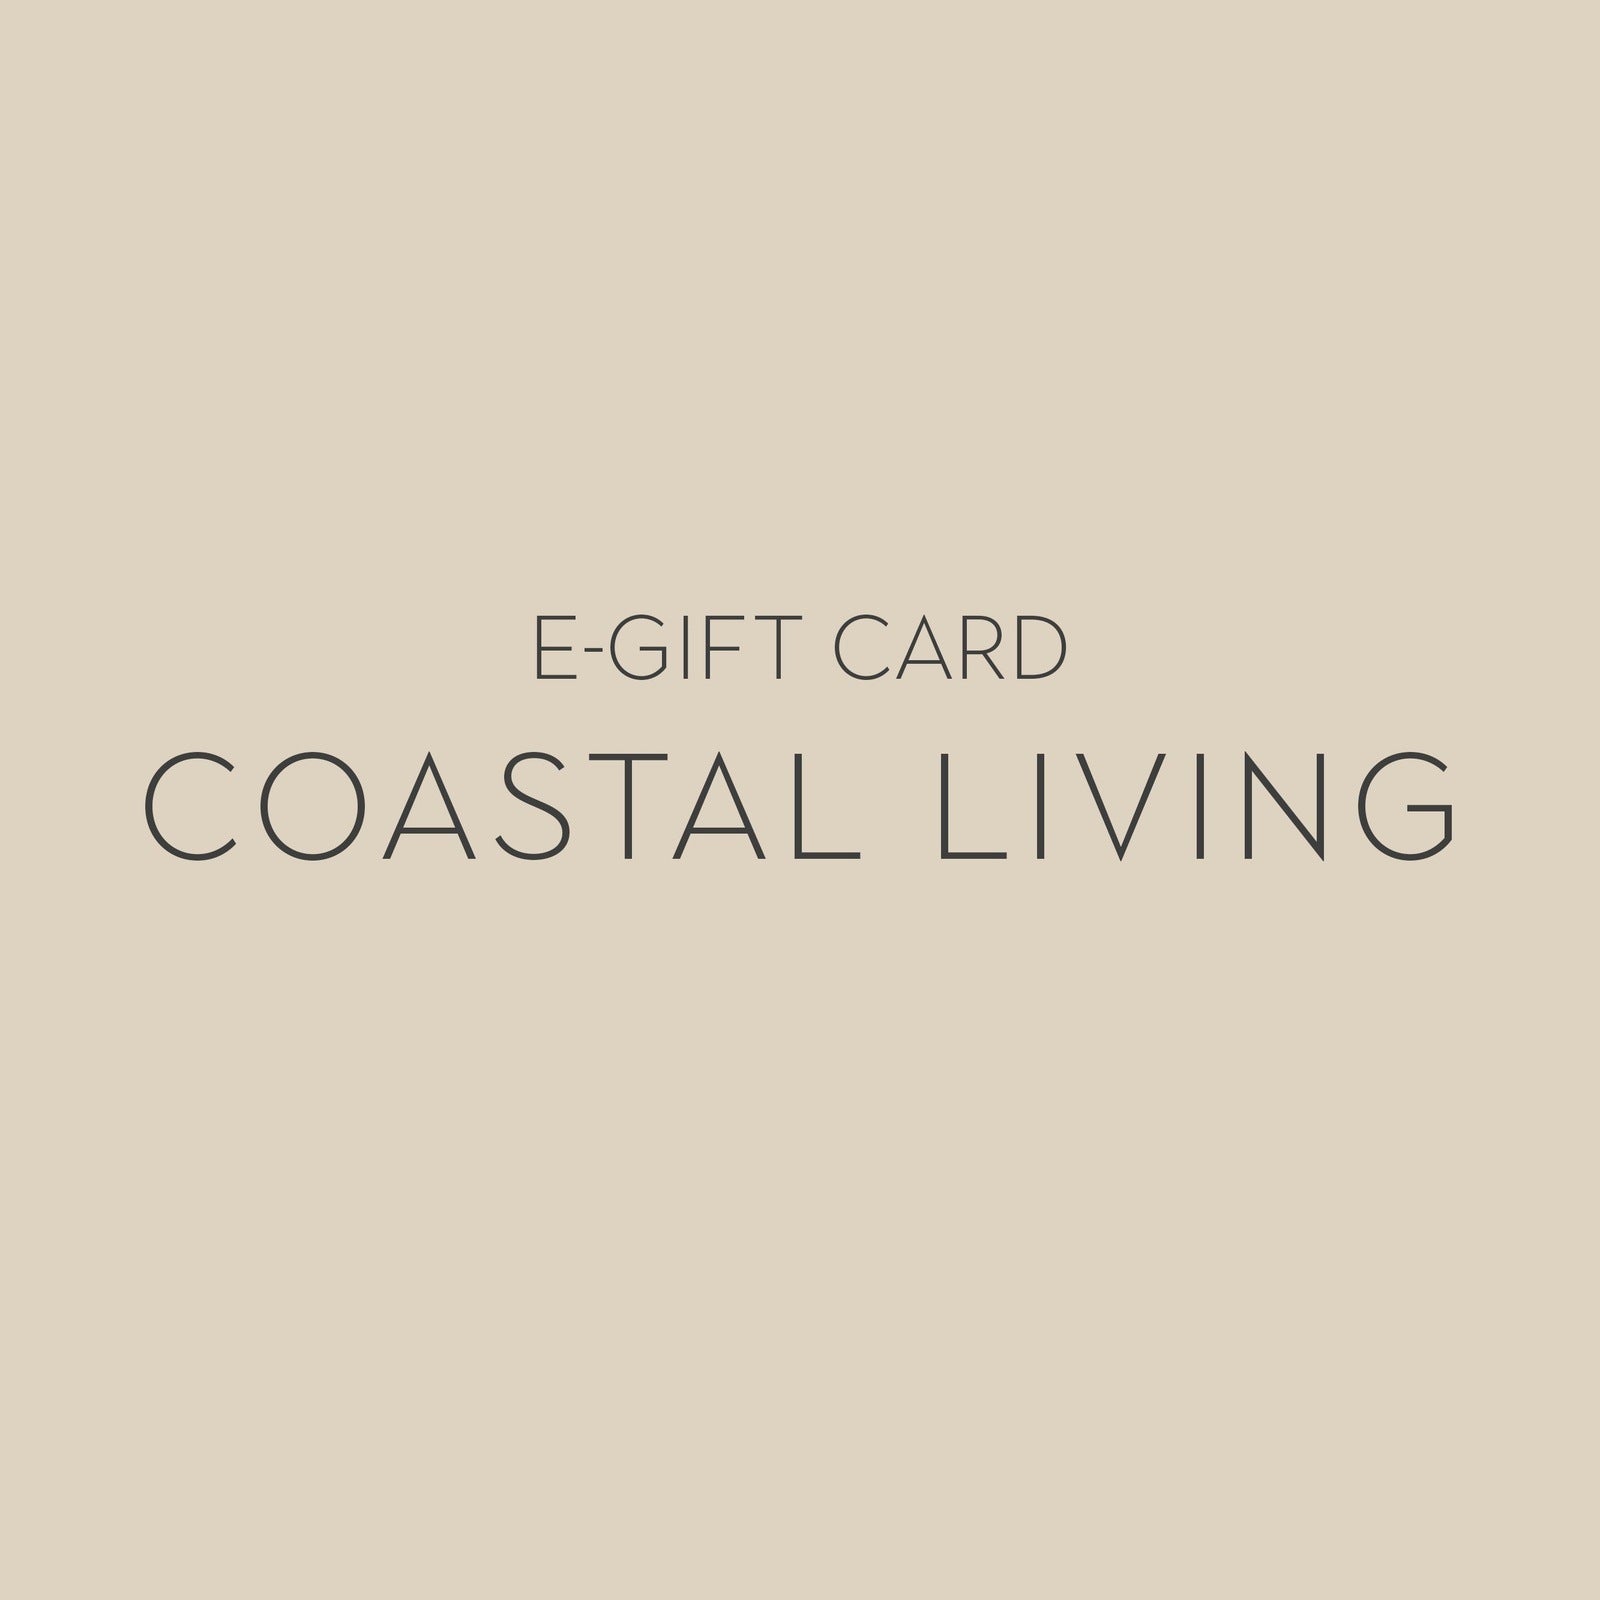 Coastal Living E-Gift Card - Coastal Living